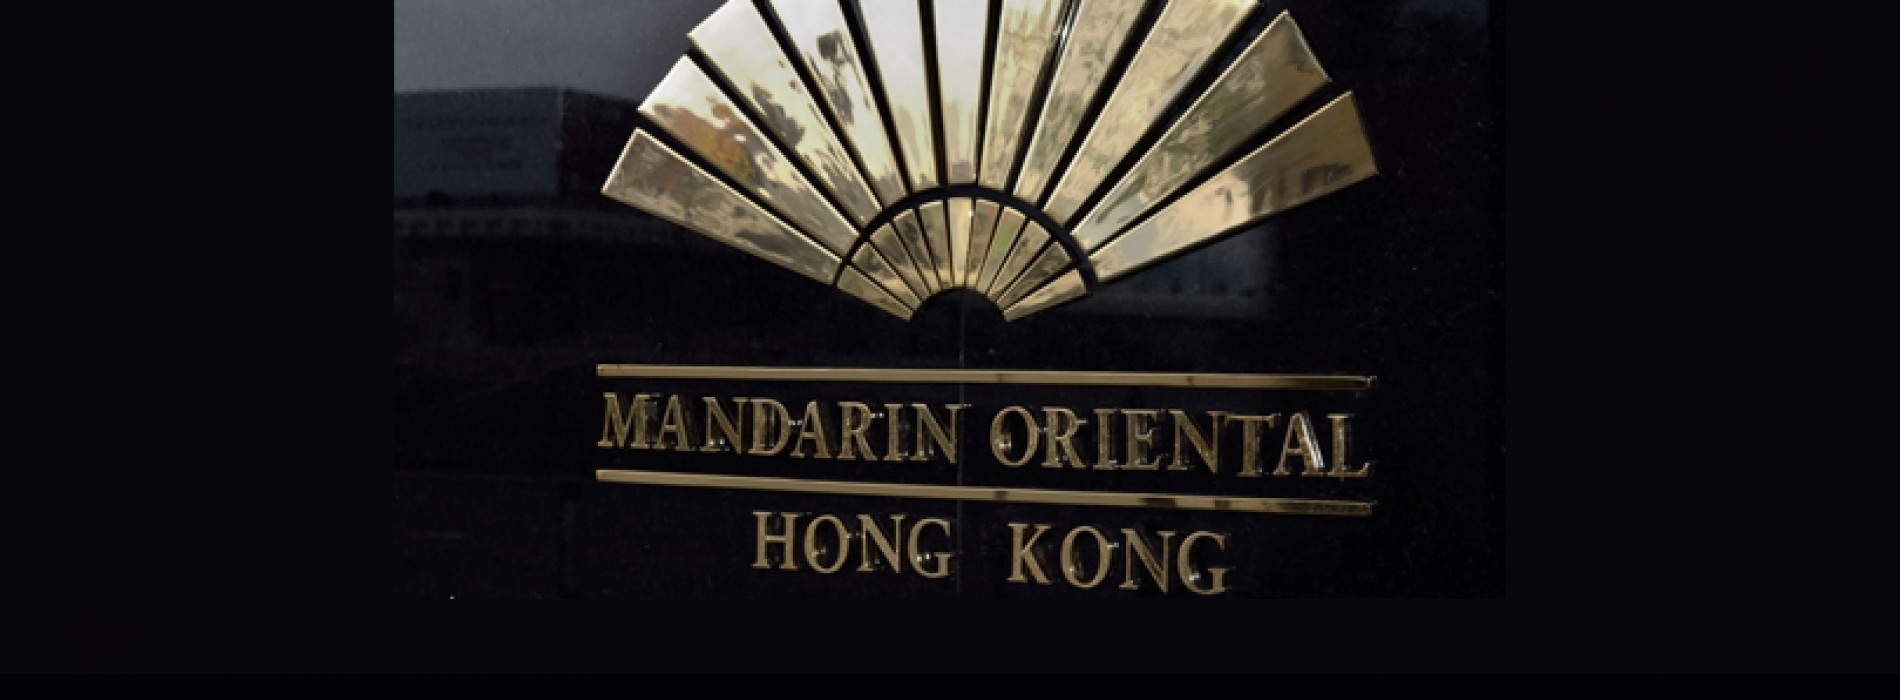 Mandarin Oriental, Hong Kong presents exclusive package for Art Lovers